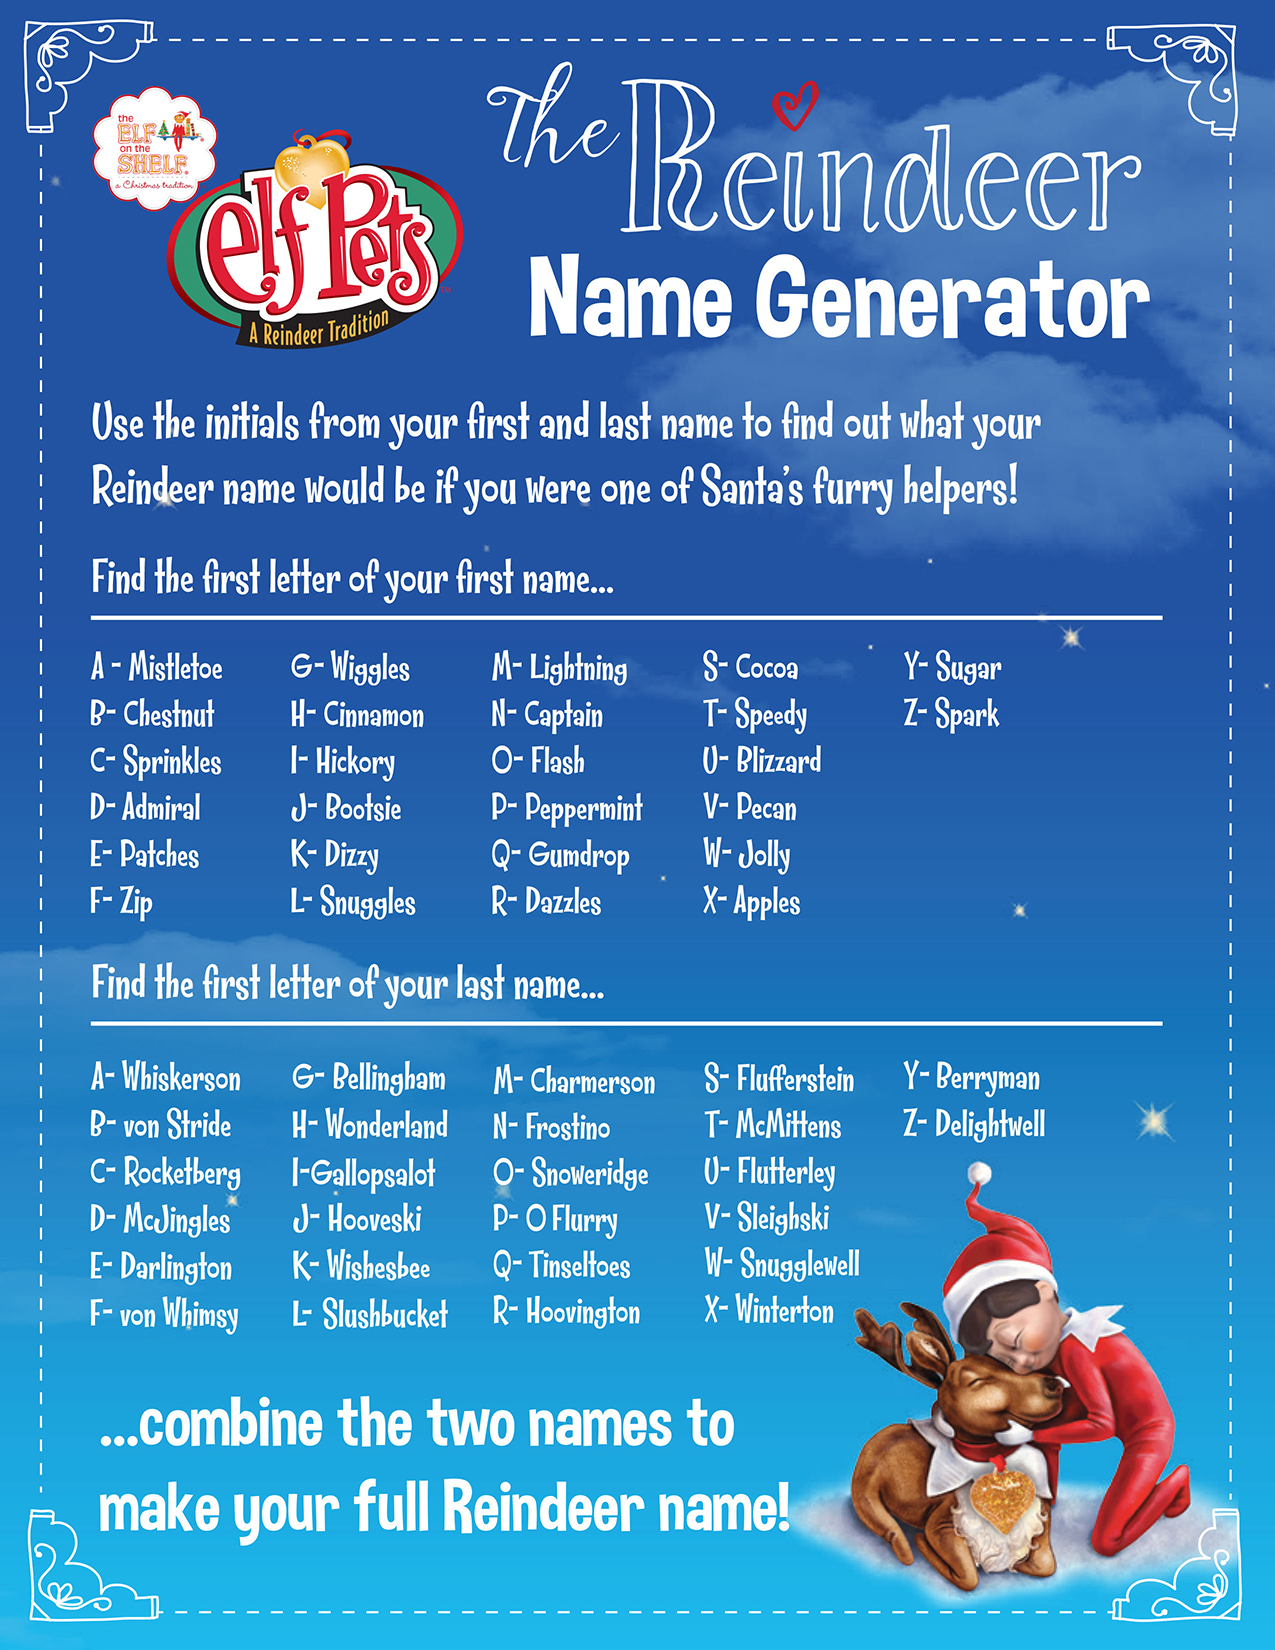 Reindeer Name Generator – The Elf on the Shelf